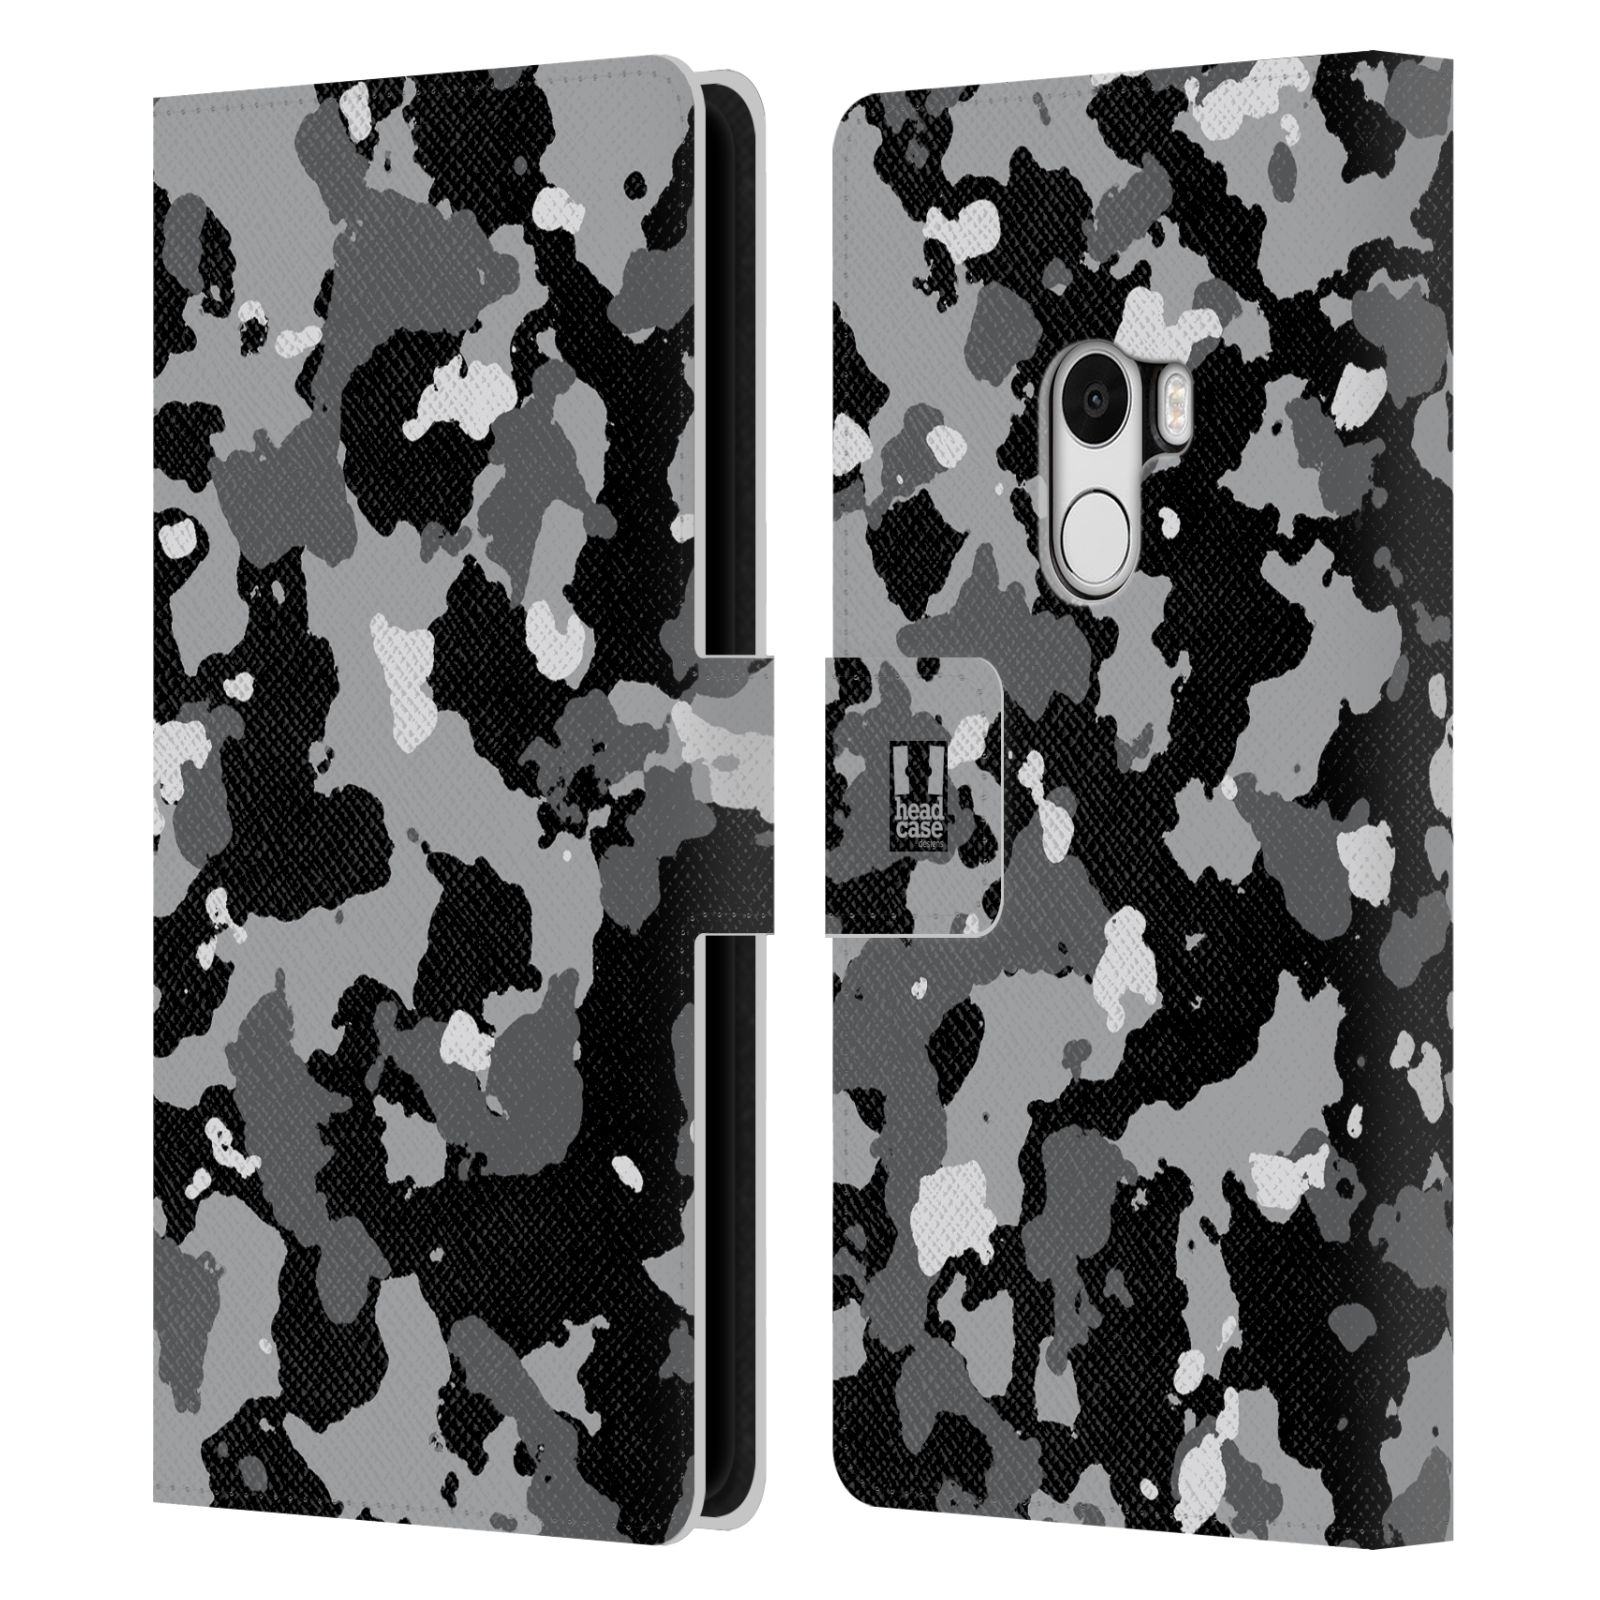 Pouzdro na mobil Xiaomi Mi Mix - Head Case - kamuflaž černá a šedá